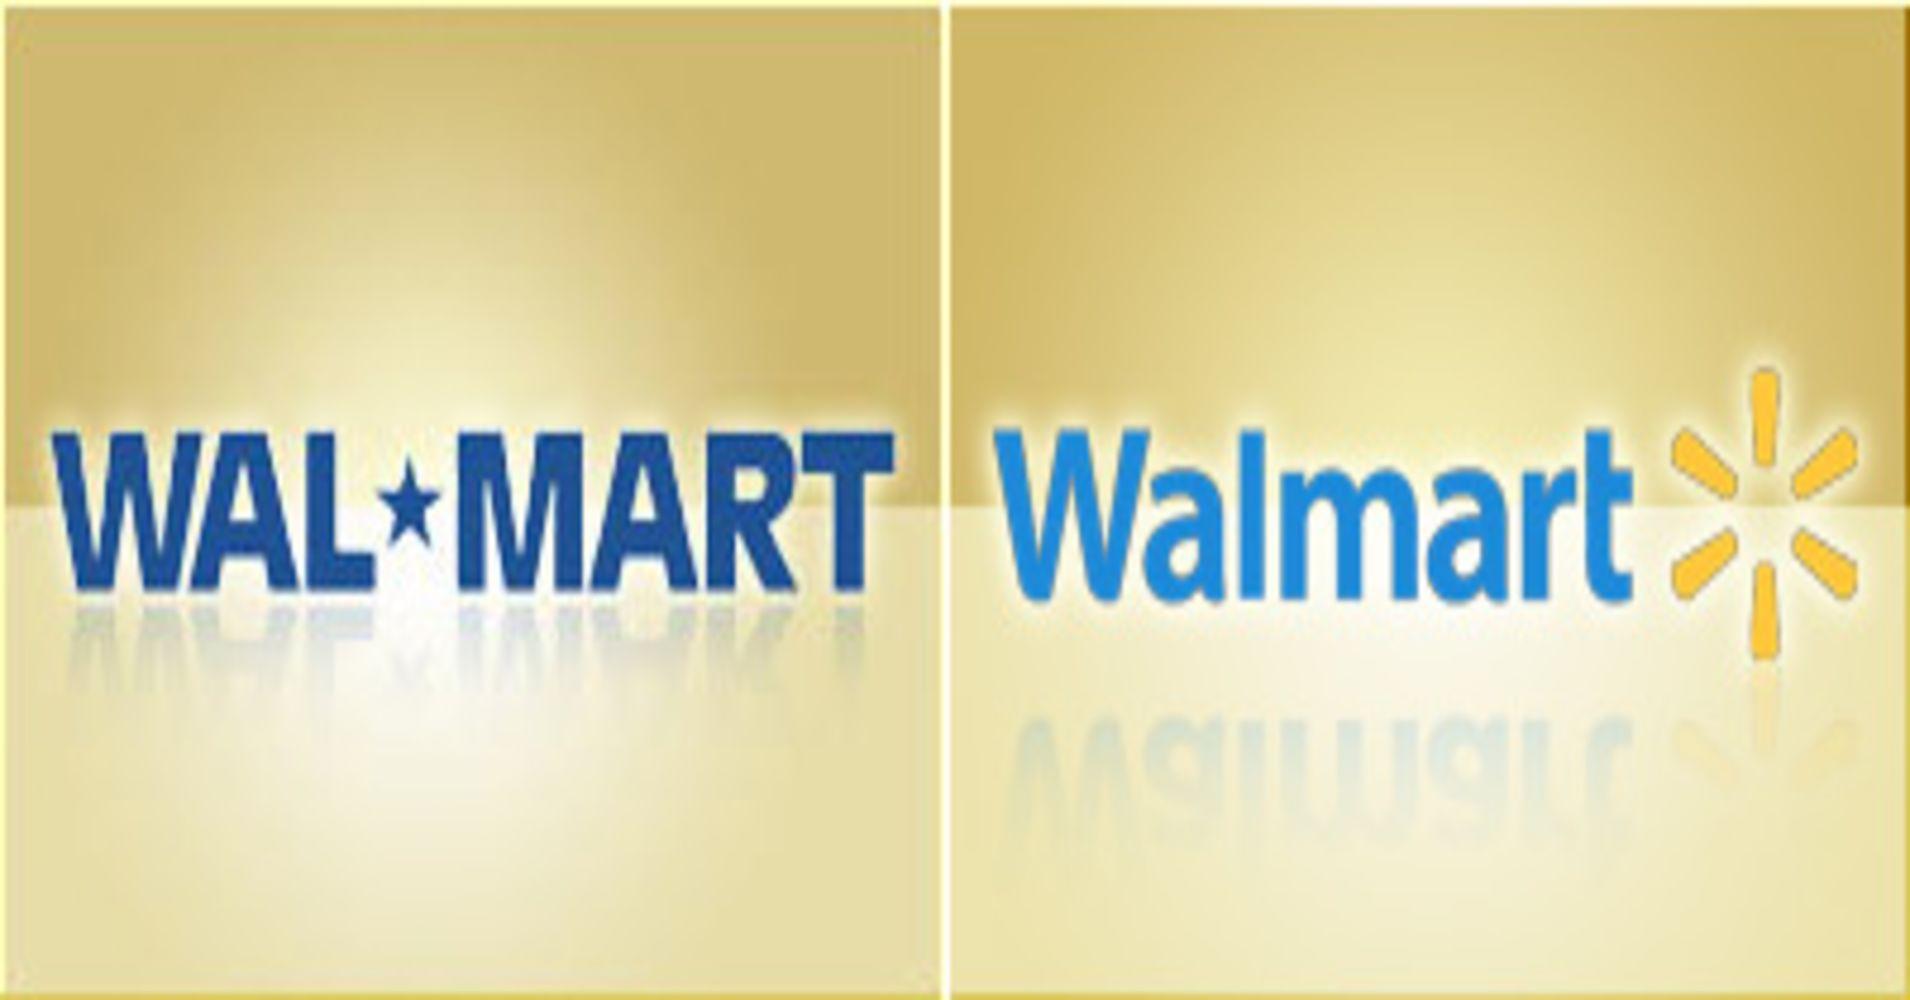 WA L Logo - Wal-Mart? Wal*Mart?? Walmart???